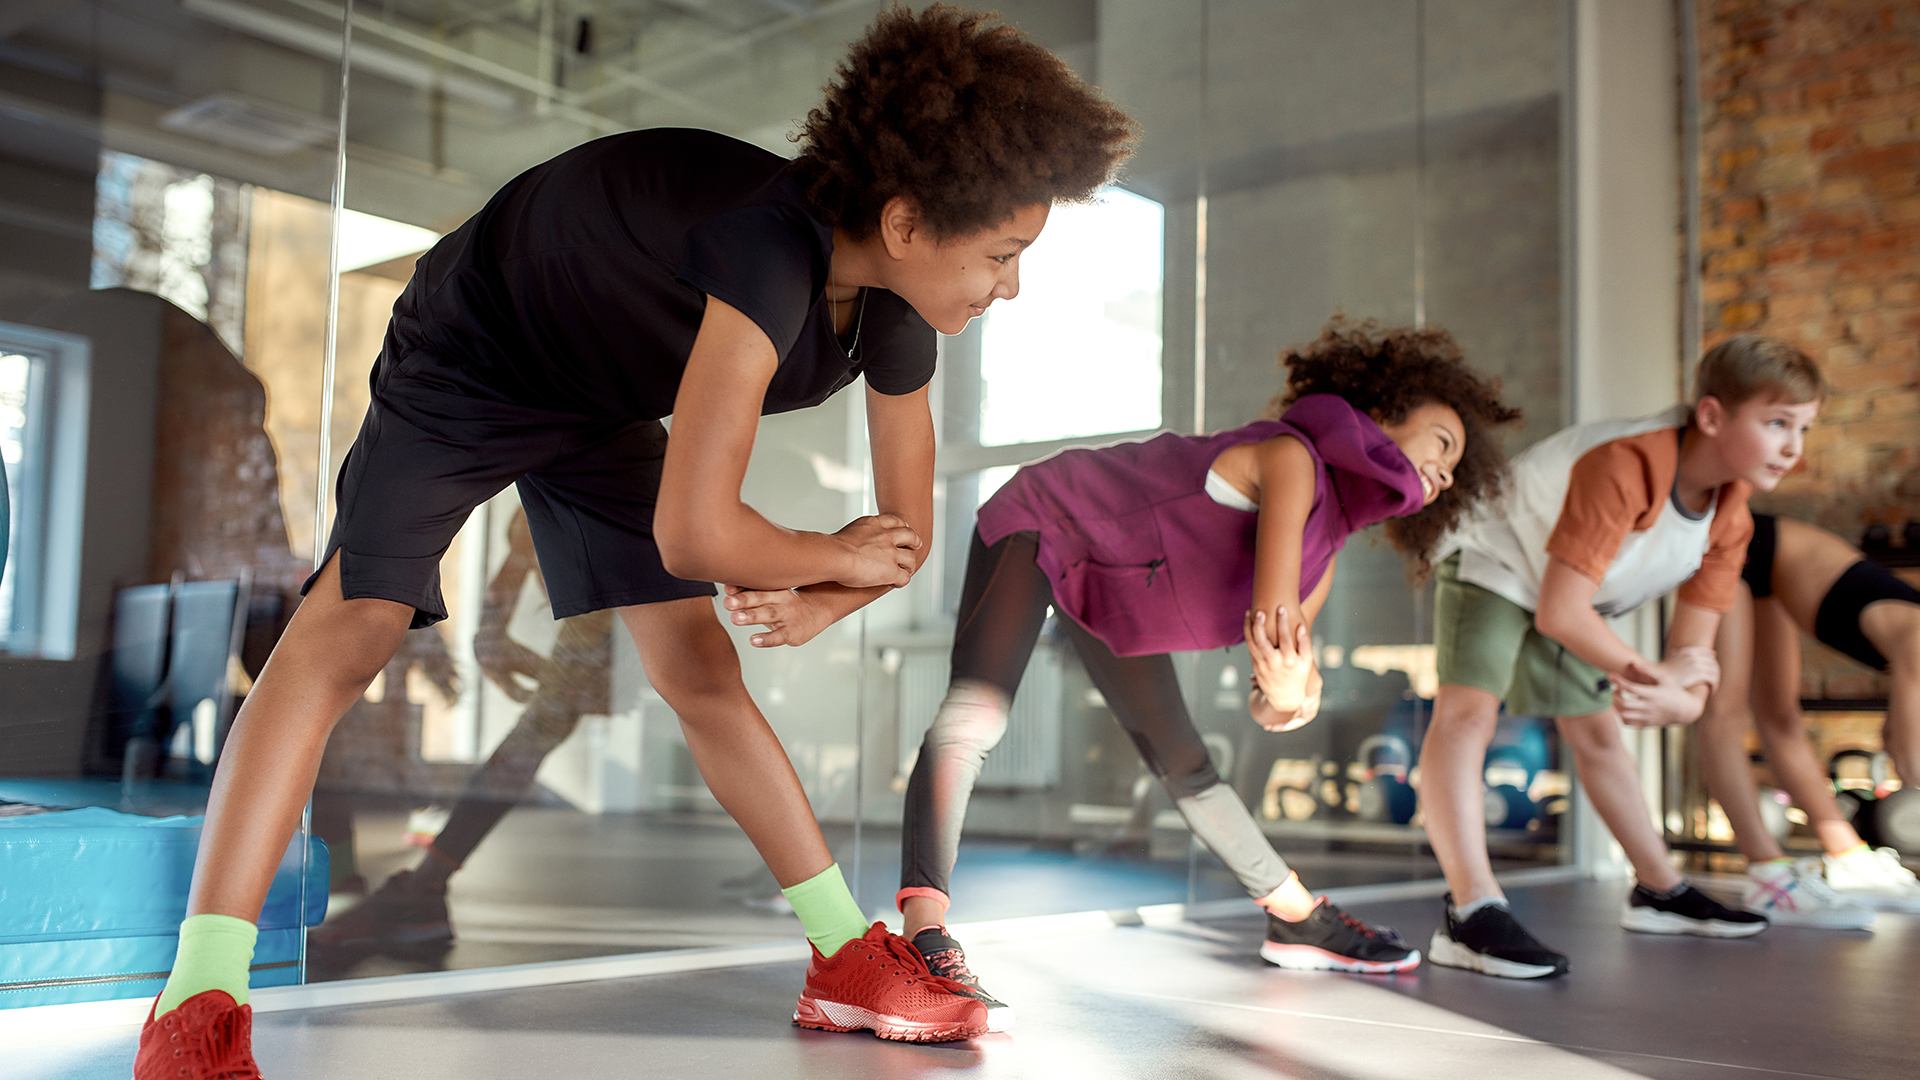 Regular exercise improves mental health in pre-teen years